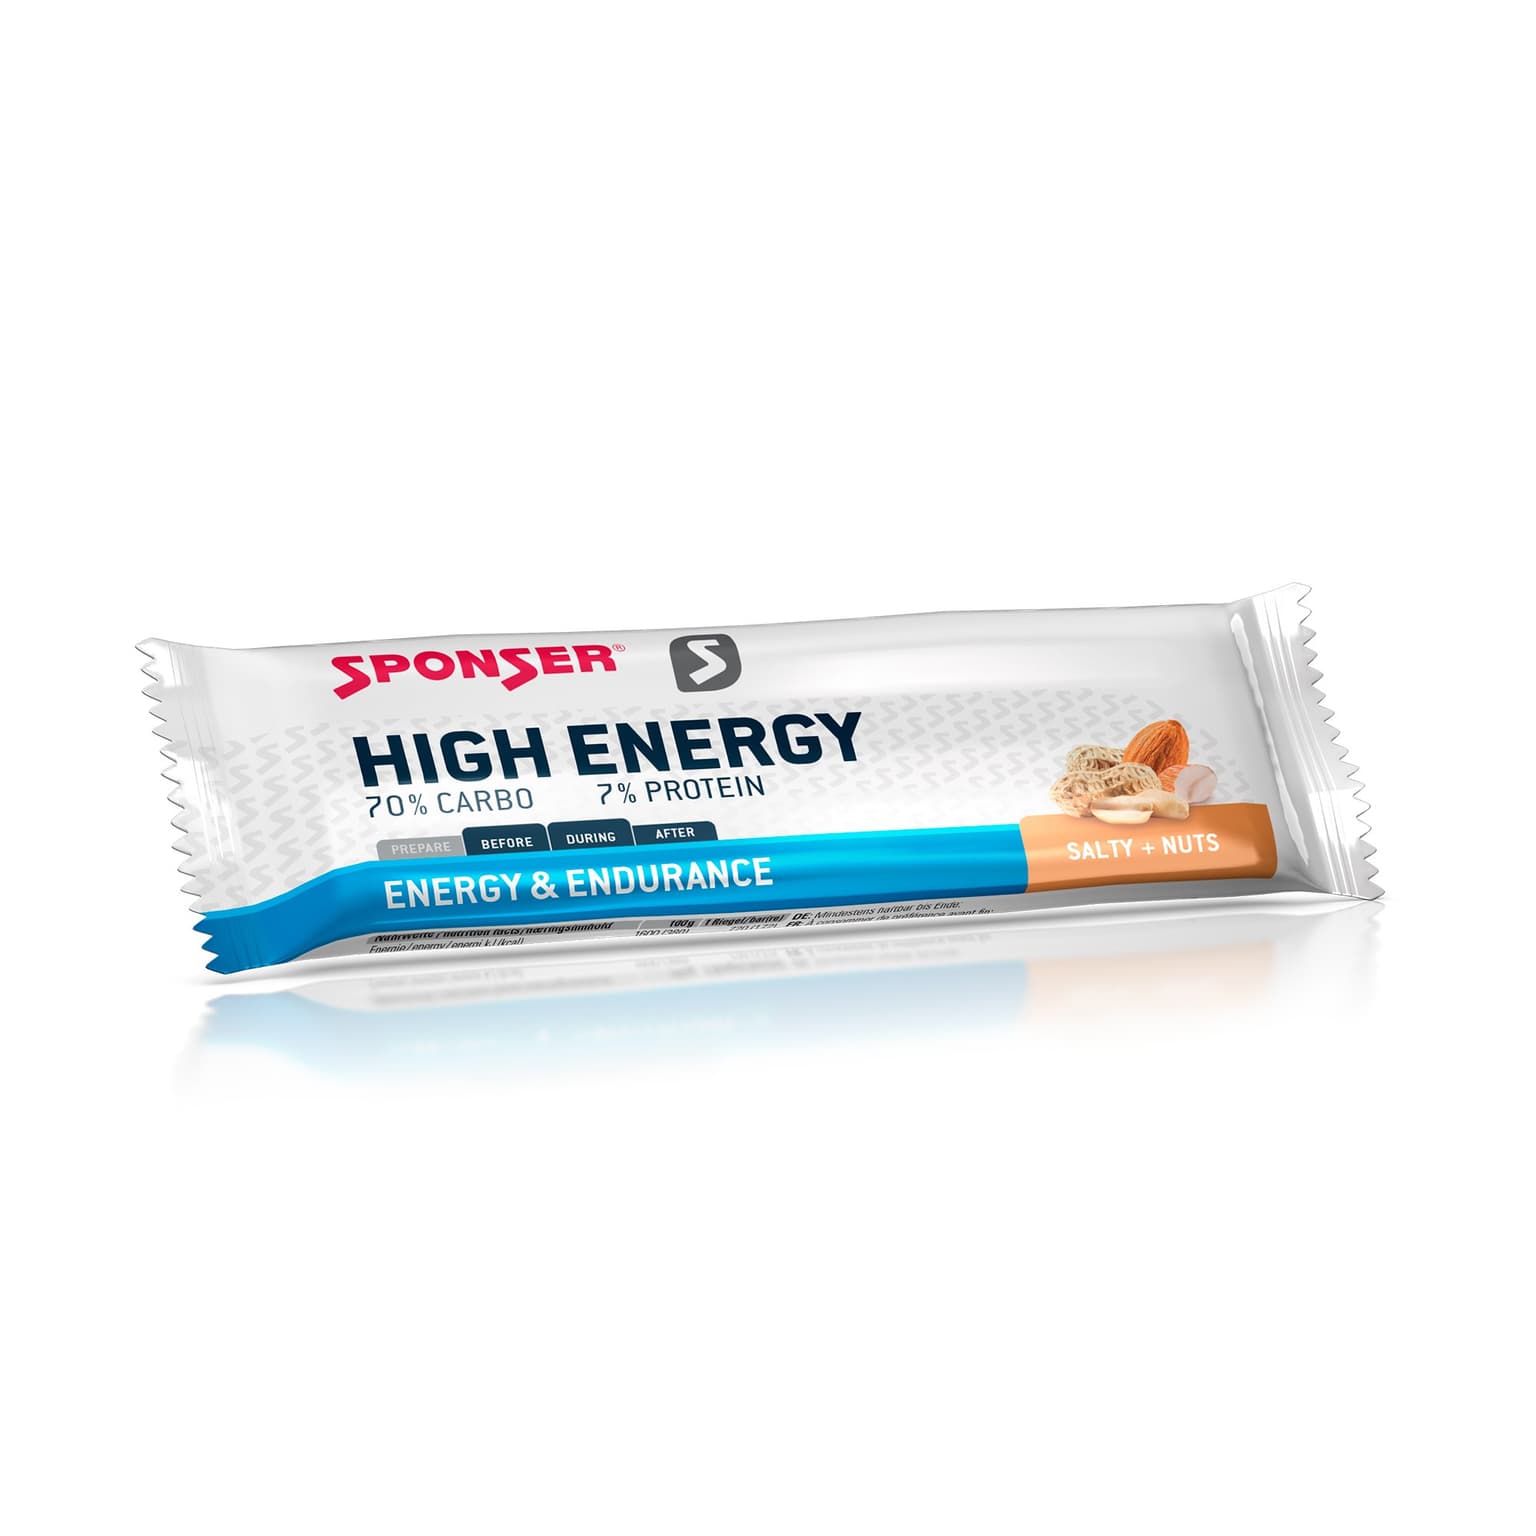 Sponser Sponser High Energy Bar Barrette energetiche 1